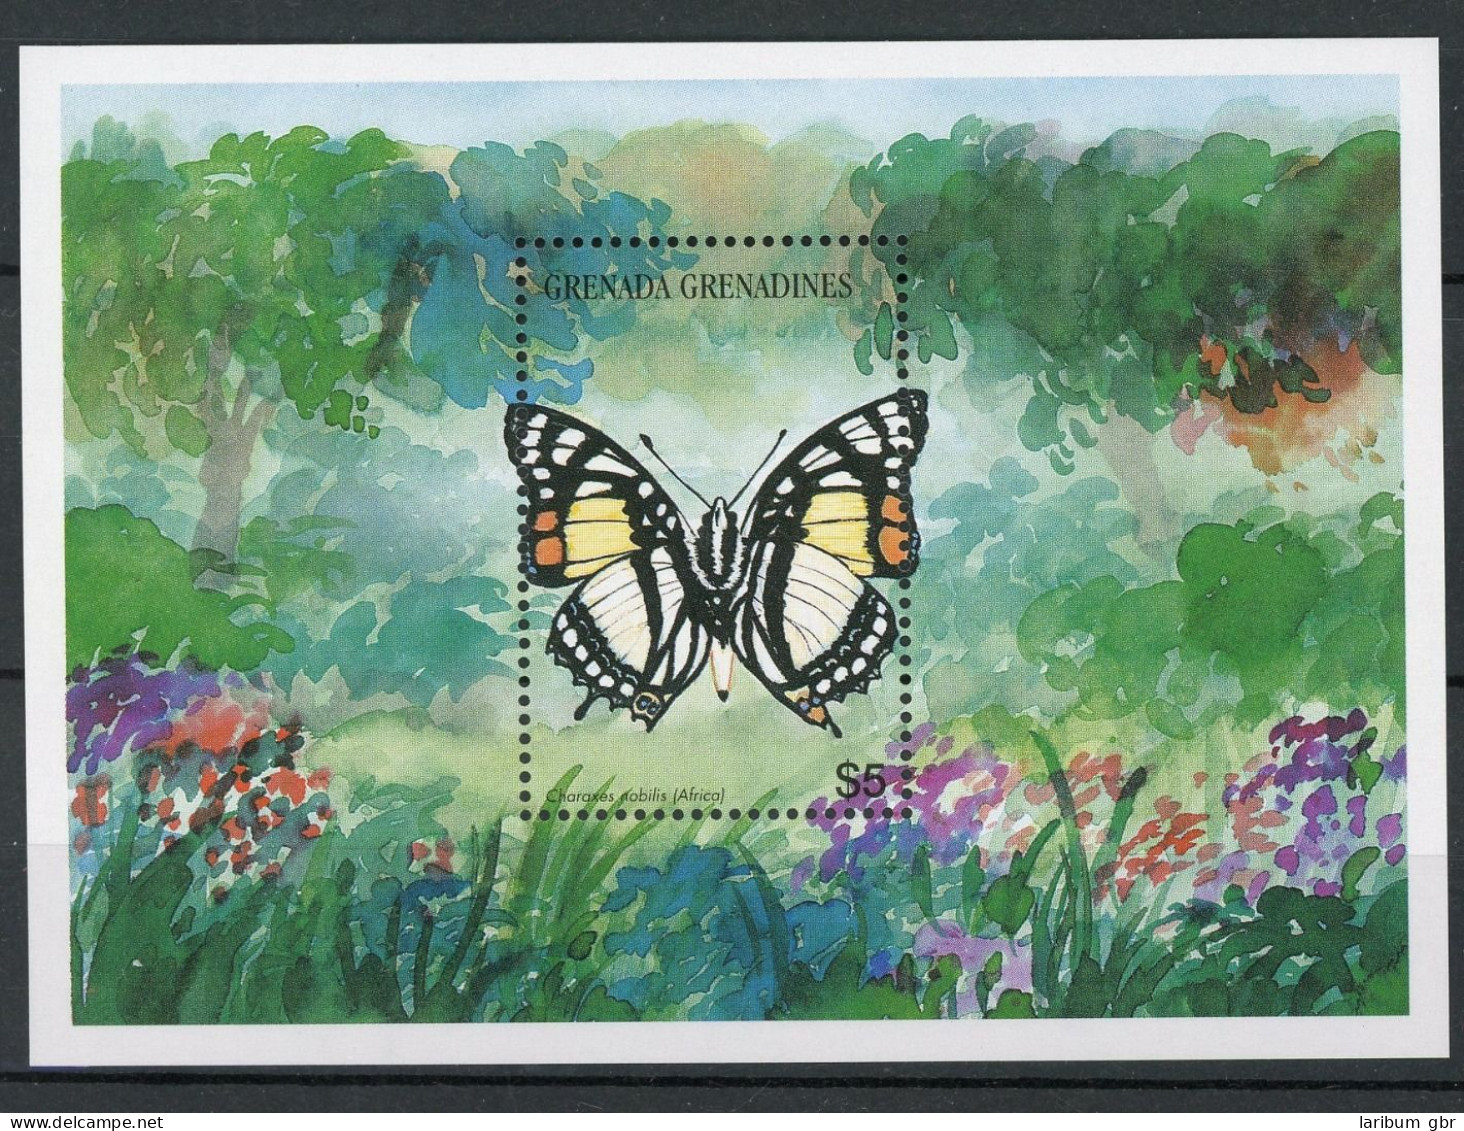 Grenada/ Grenadinen Block 395 Postfrisch Schmetterlinge #HB150 - Anguilla (1968-...)